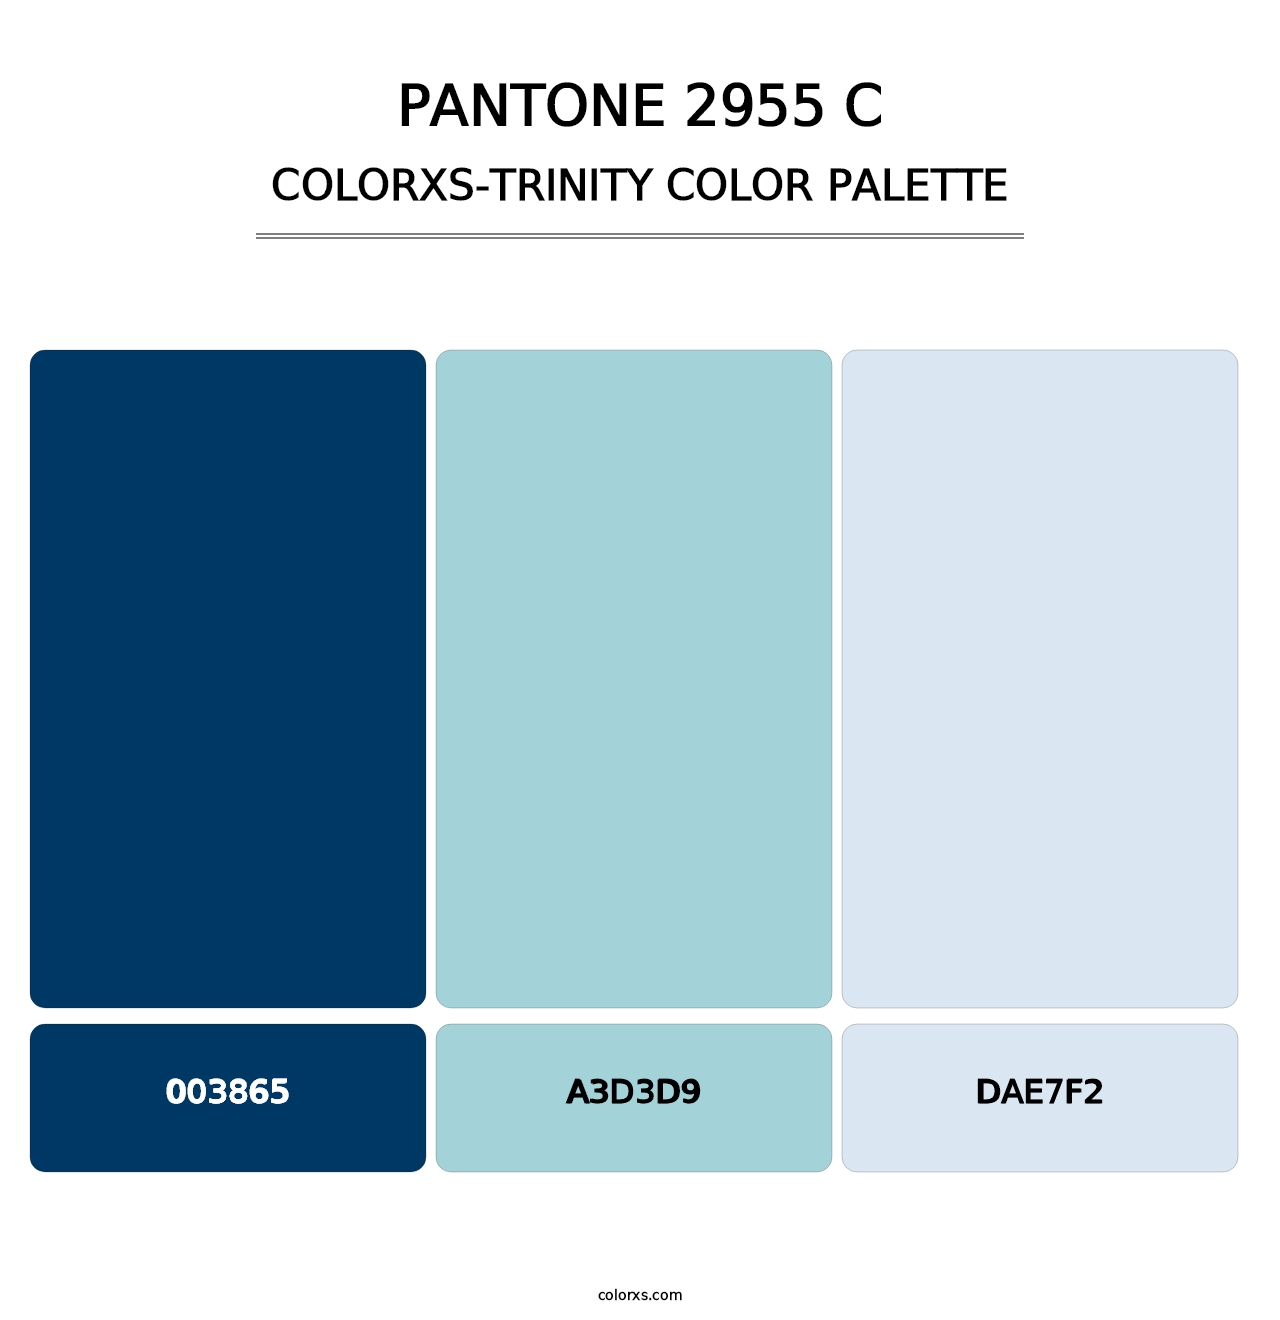 PANTONE 2955 C - Colorxs Trinity Palette